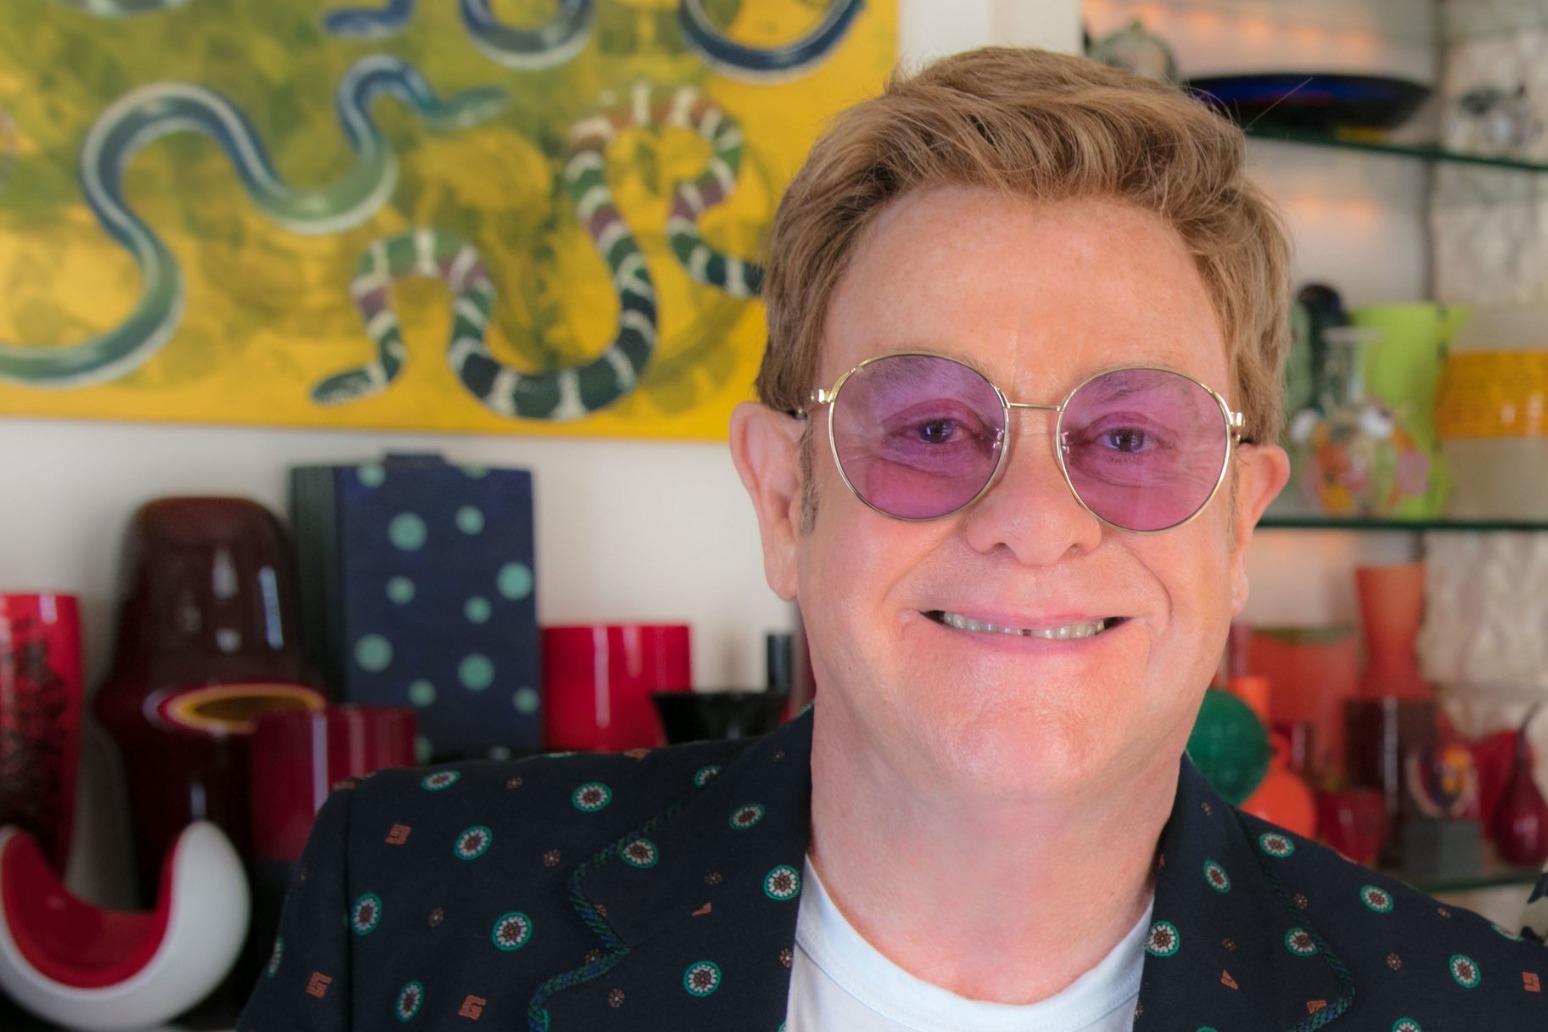 Elton John and Paul McCartney among celebrities sharing Christmas messages 